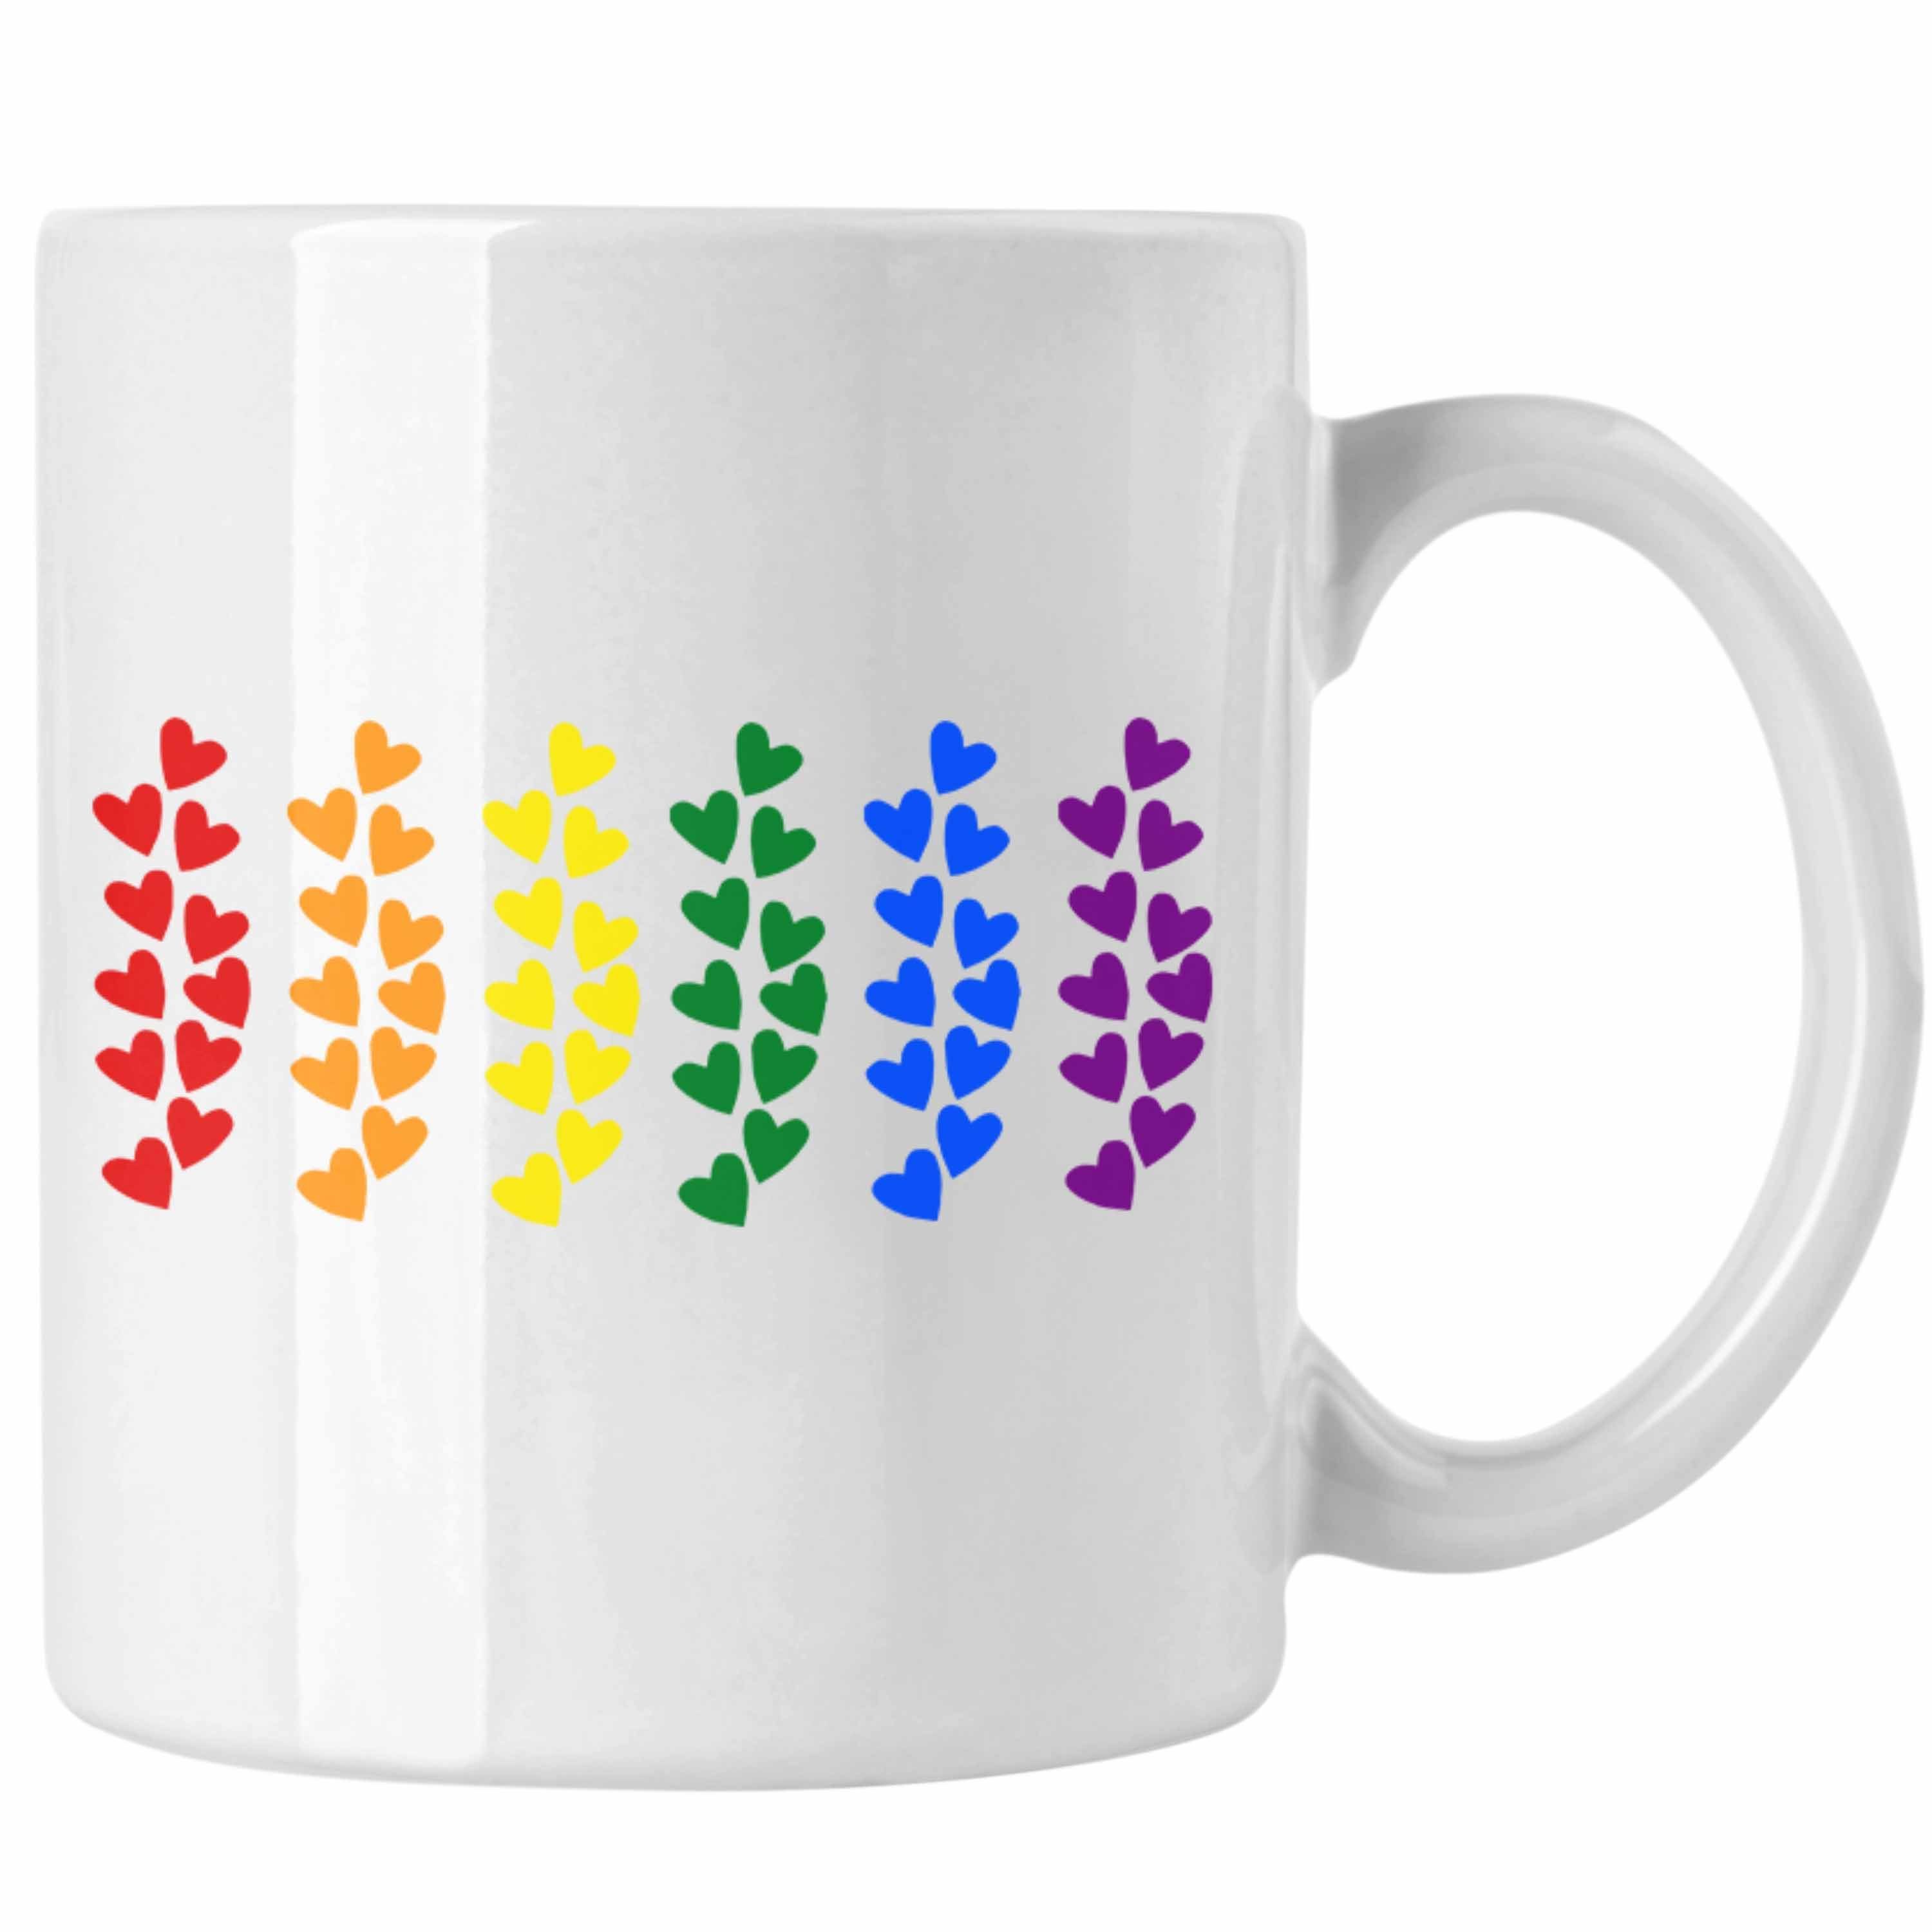 Trendation Tasse Trendation - Regenbogen Tasse Geschenk LGBT Schwule Lesben Transgender Grafik Pride Herzen Flagge Weiss